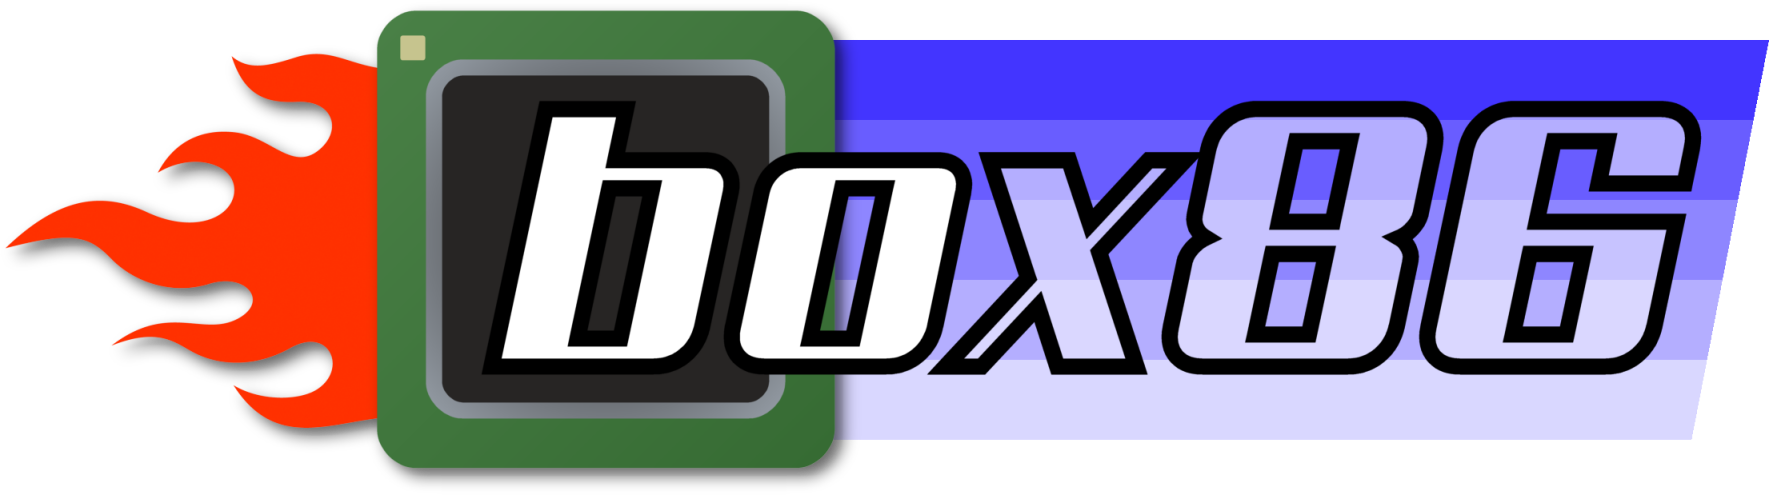 Box86 logo